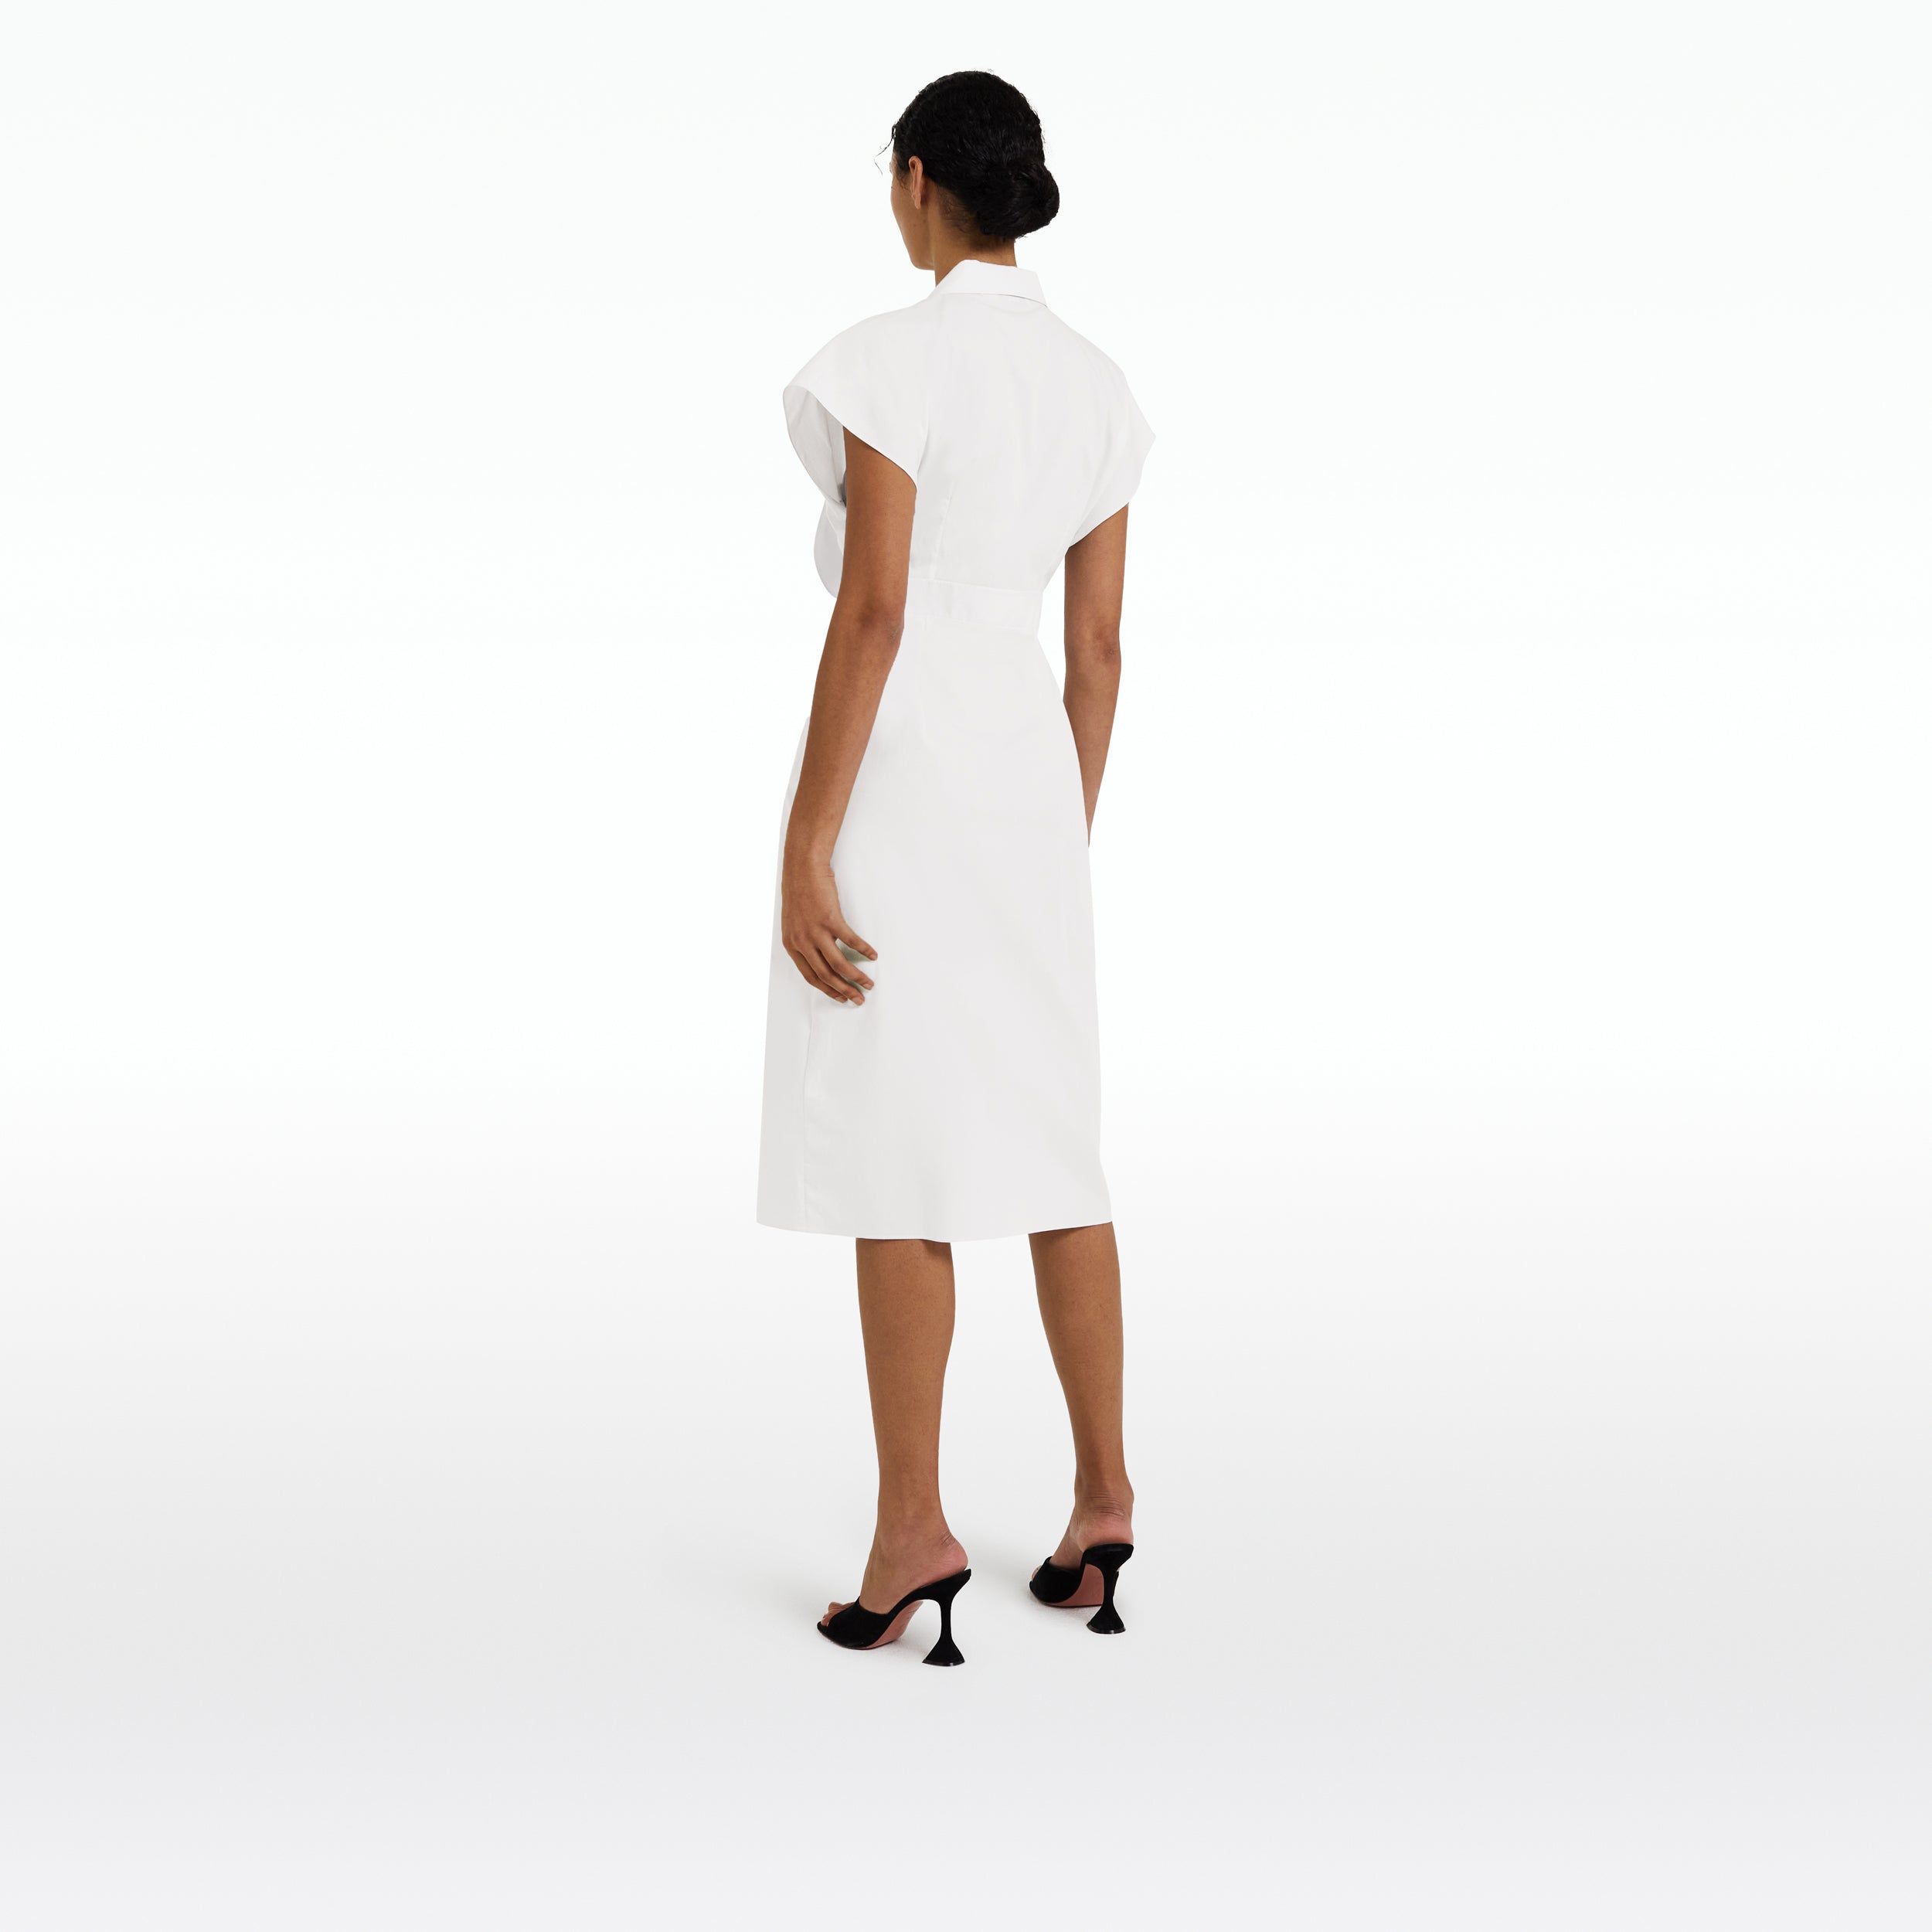 Calianne White Cotton Dress